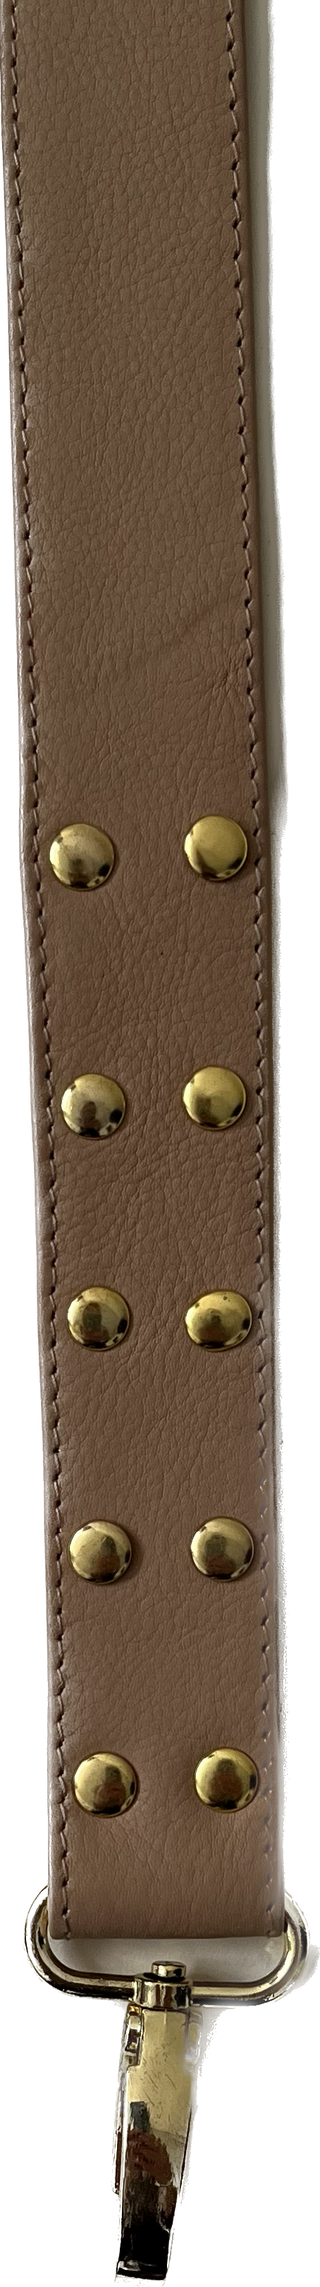 Leather Crossbody Bag - Sand Gold - Design Emporium